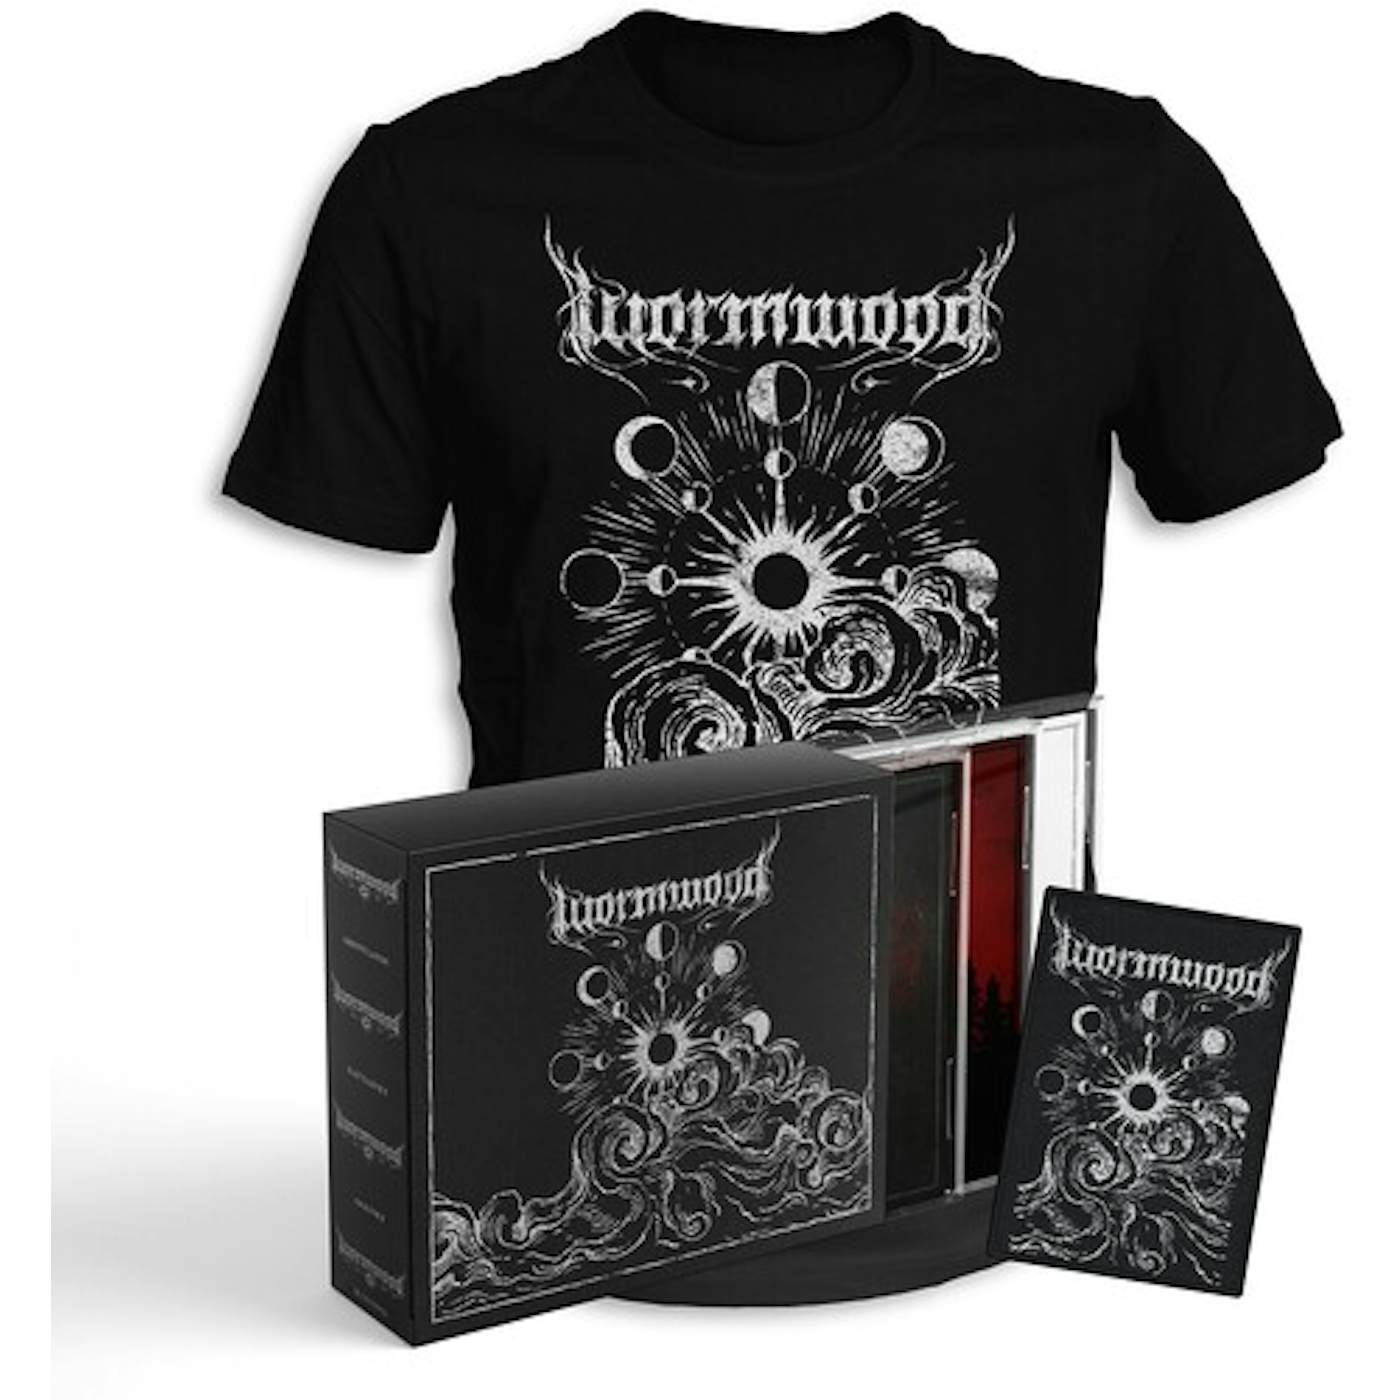 Wormwood 3CD BOX + TST MEDIUM + PATCH